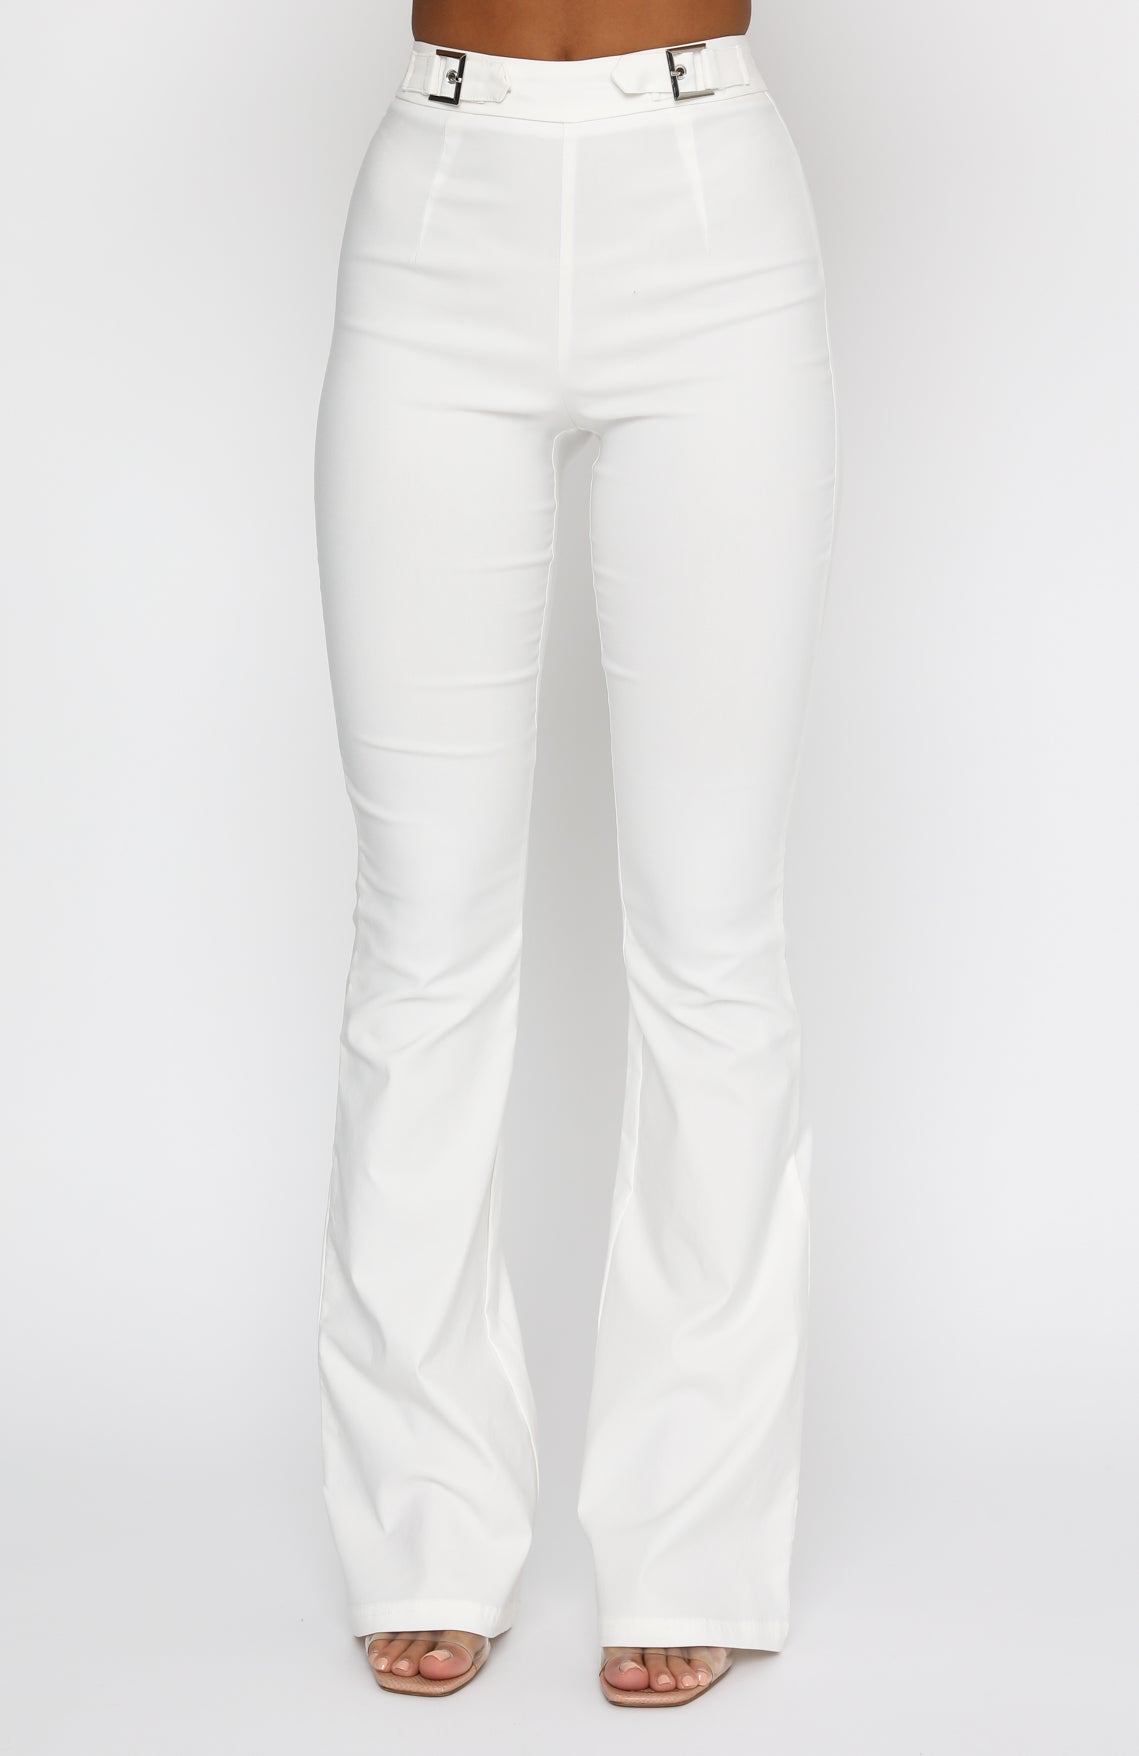 High Waisted White Pants, Shop 6 items